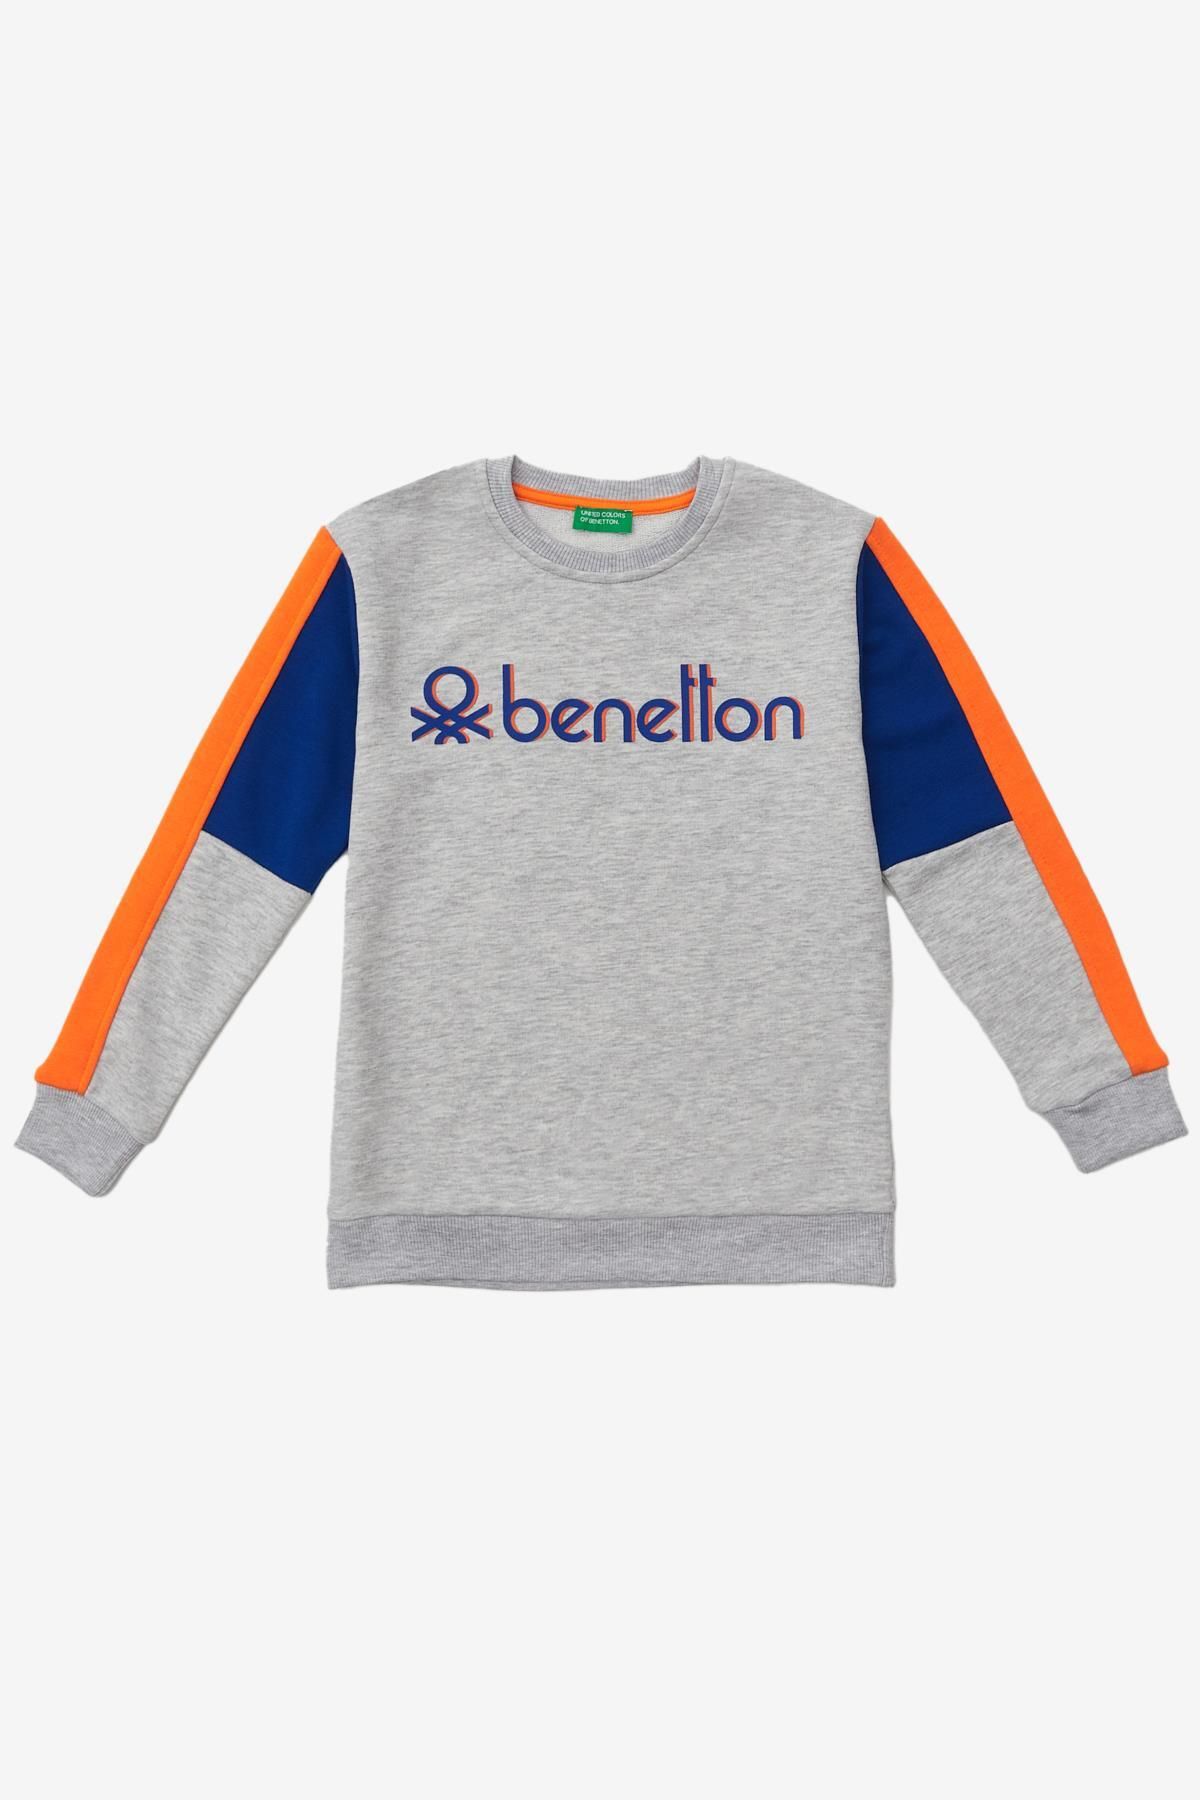 Benetton BNT-B20896 Sweatshirt BNT-B20896